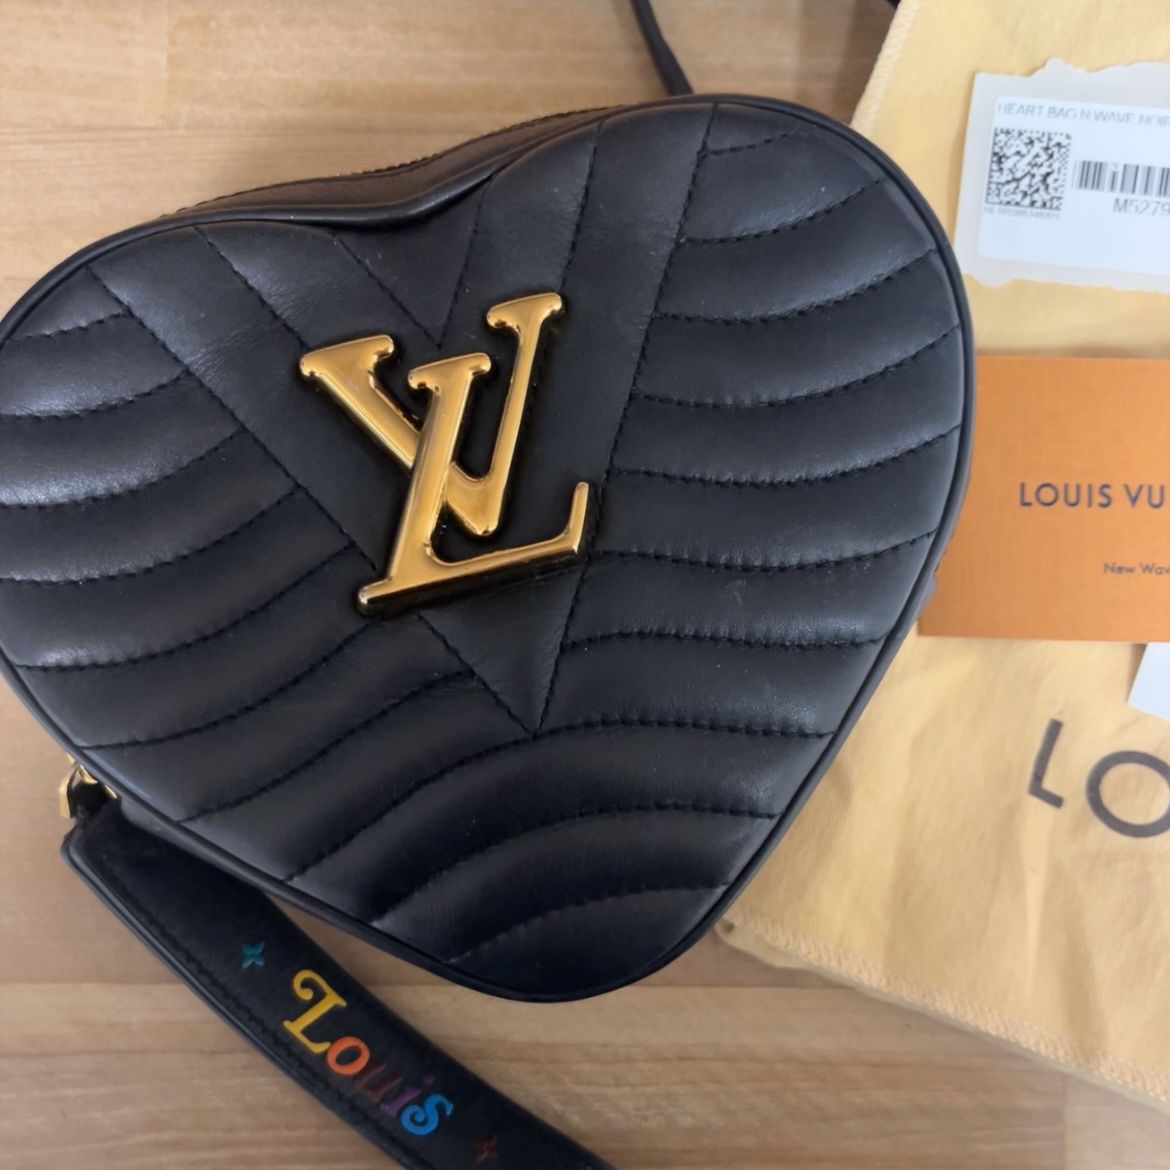 Louis Vuitton New Wave Heart Bag - Grey Crossbody Bags, Handbags -  LOU745302